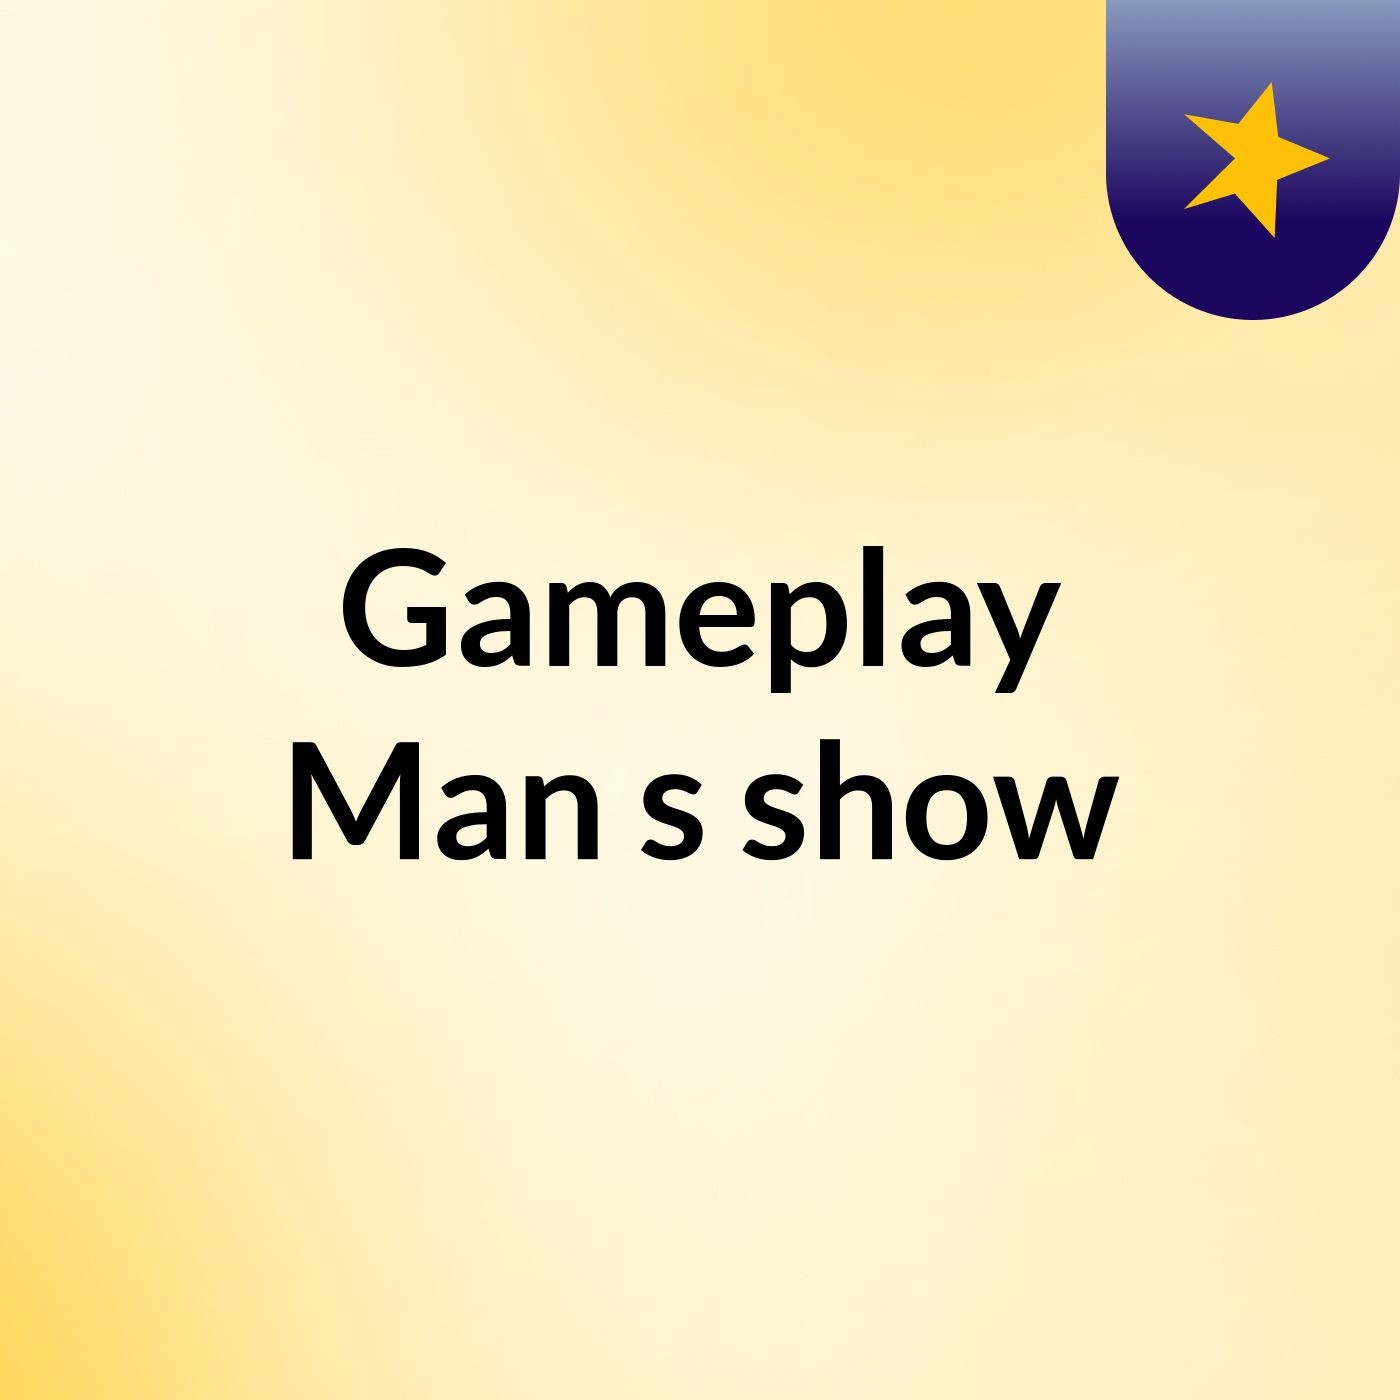 Gameplay Man's show